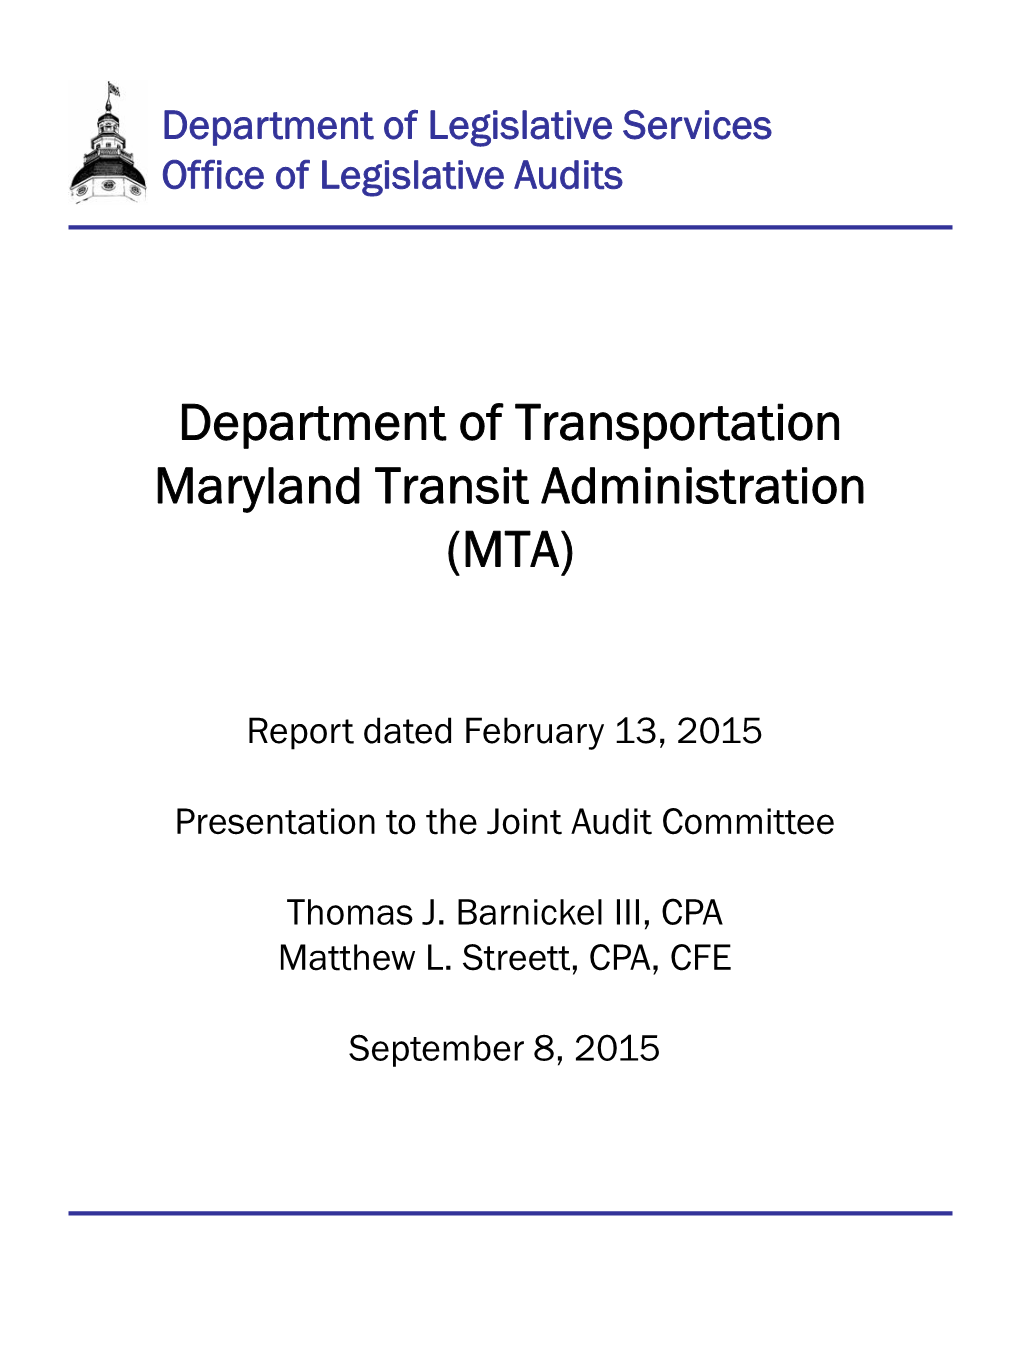 Department of Transportation Maryland Transit Administration (MTA)